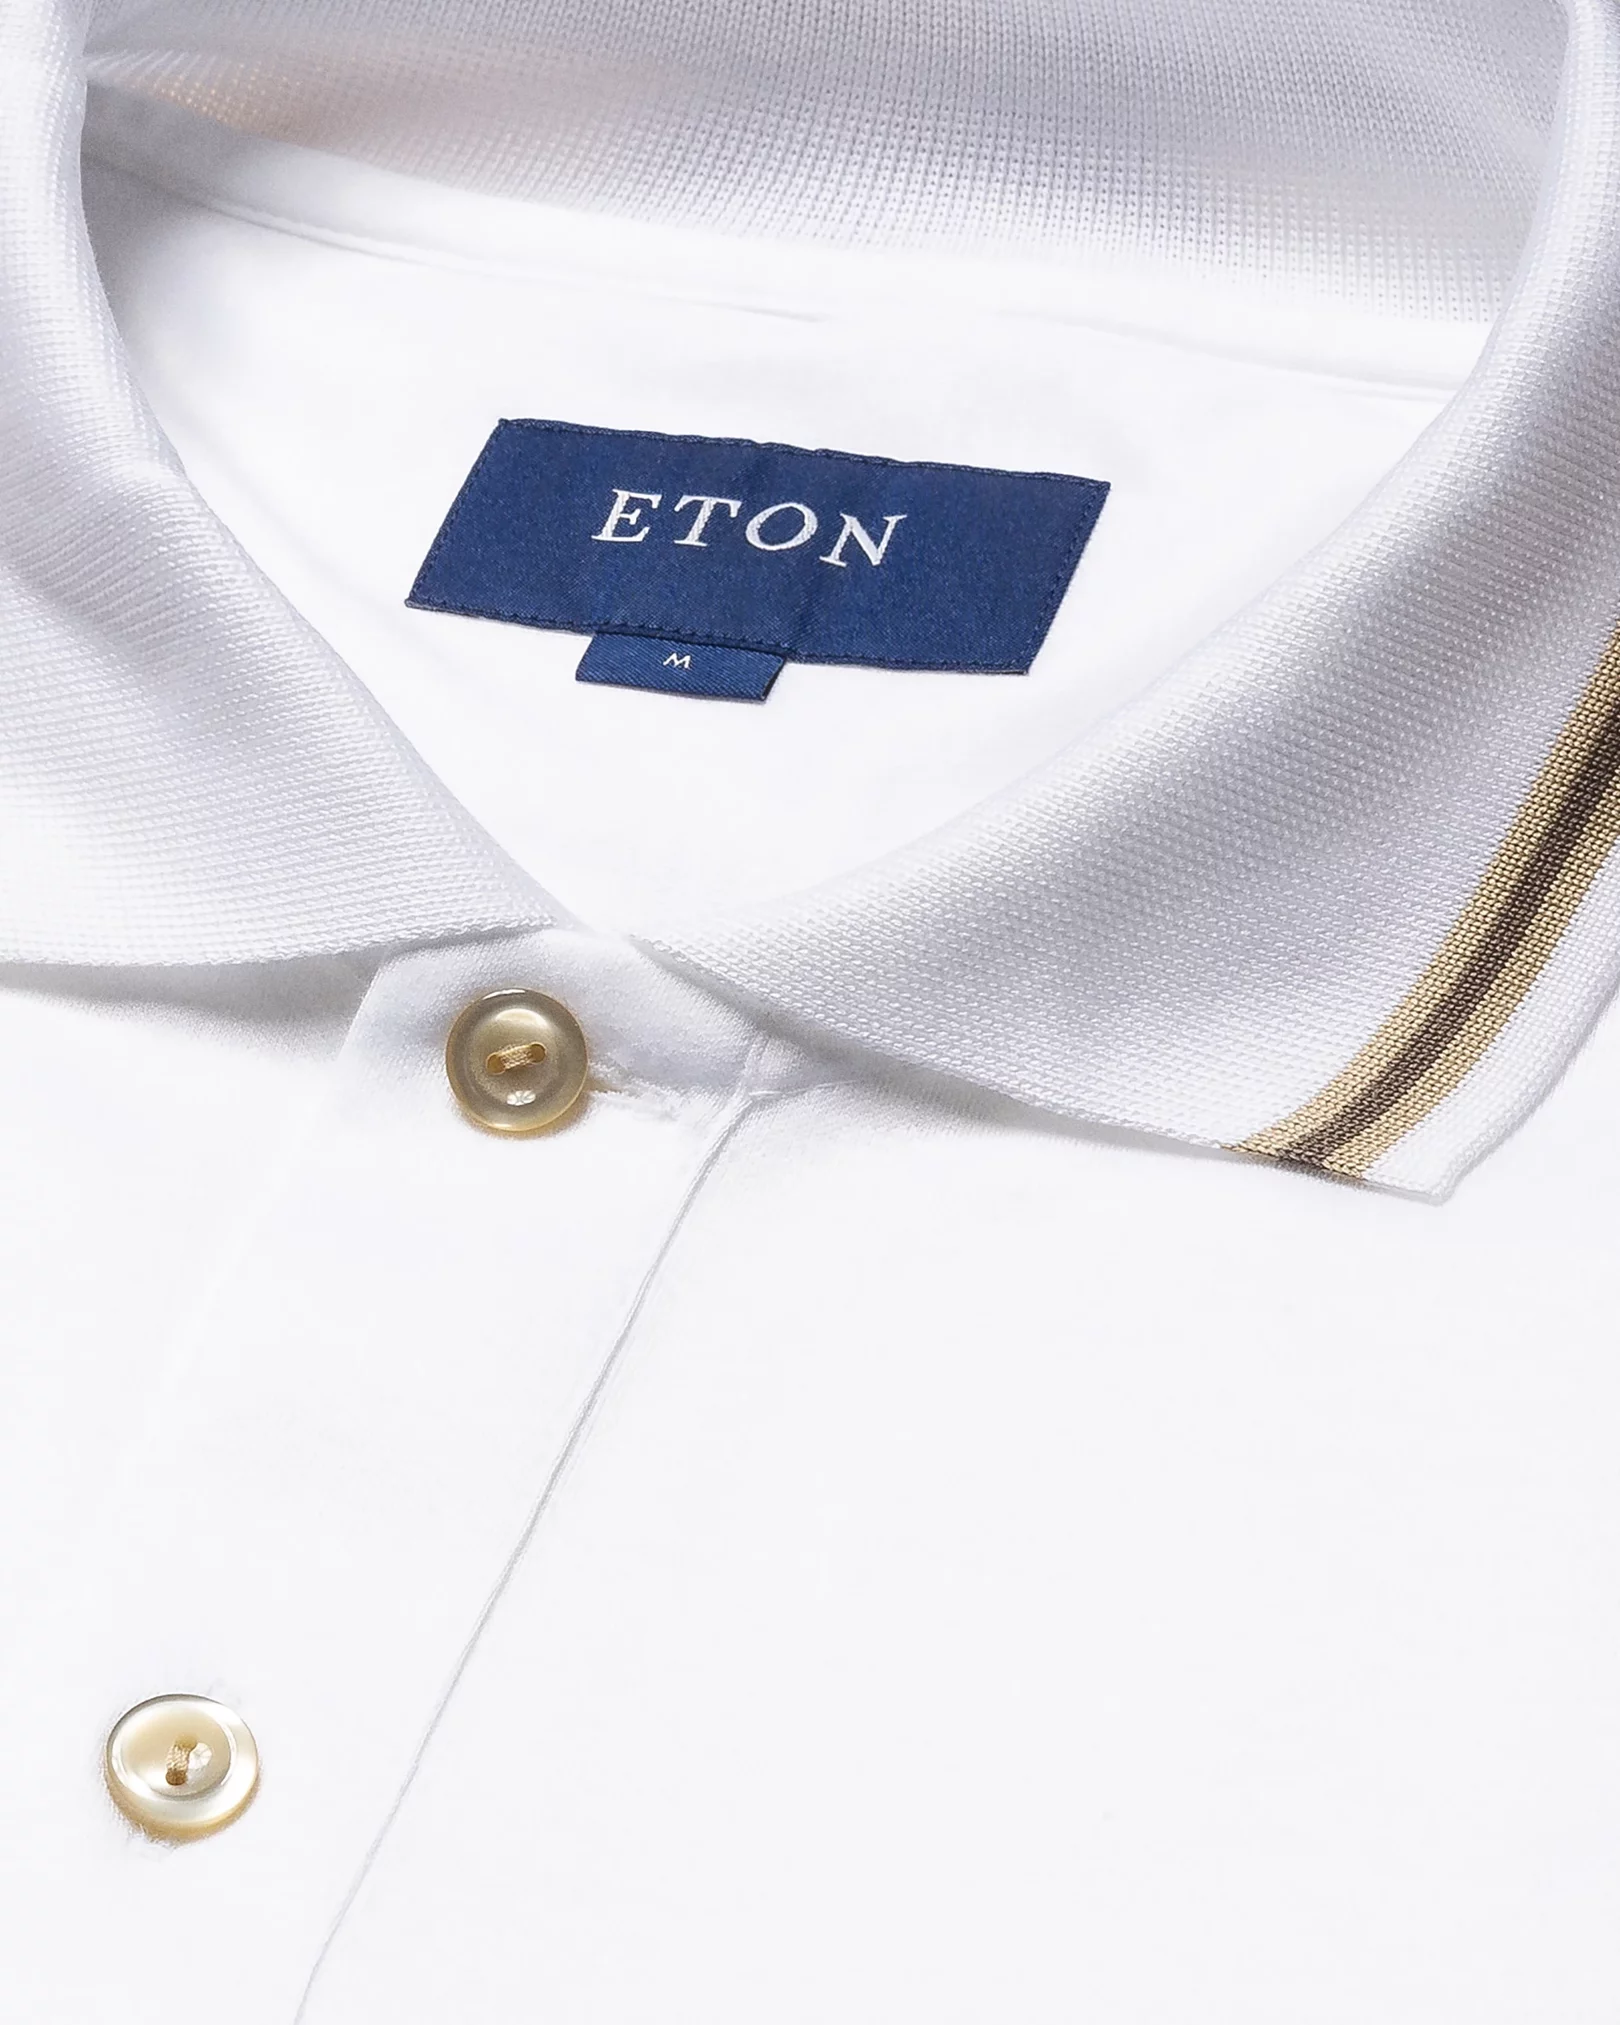 Eton - white jersey knitted collar no cuff jersey long sleeve regular fit jersey